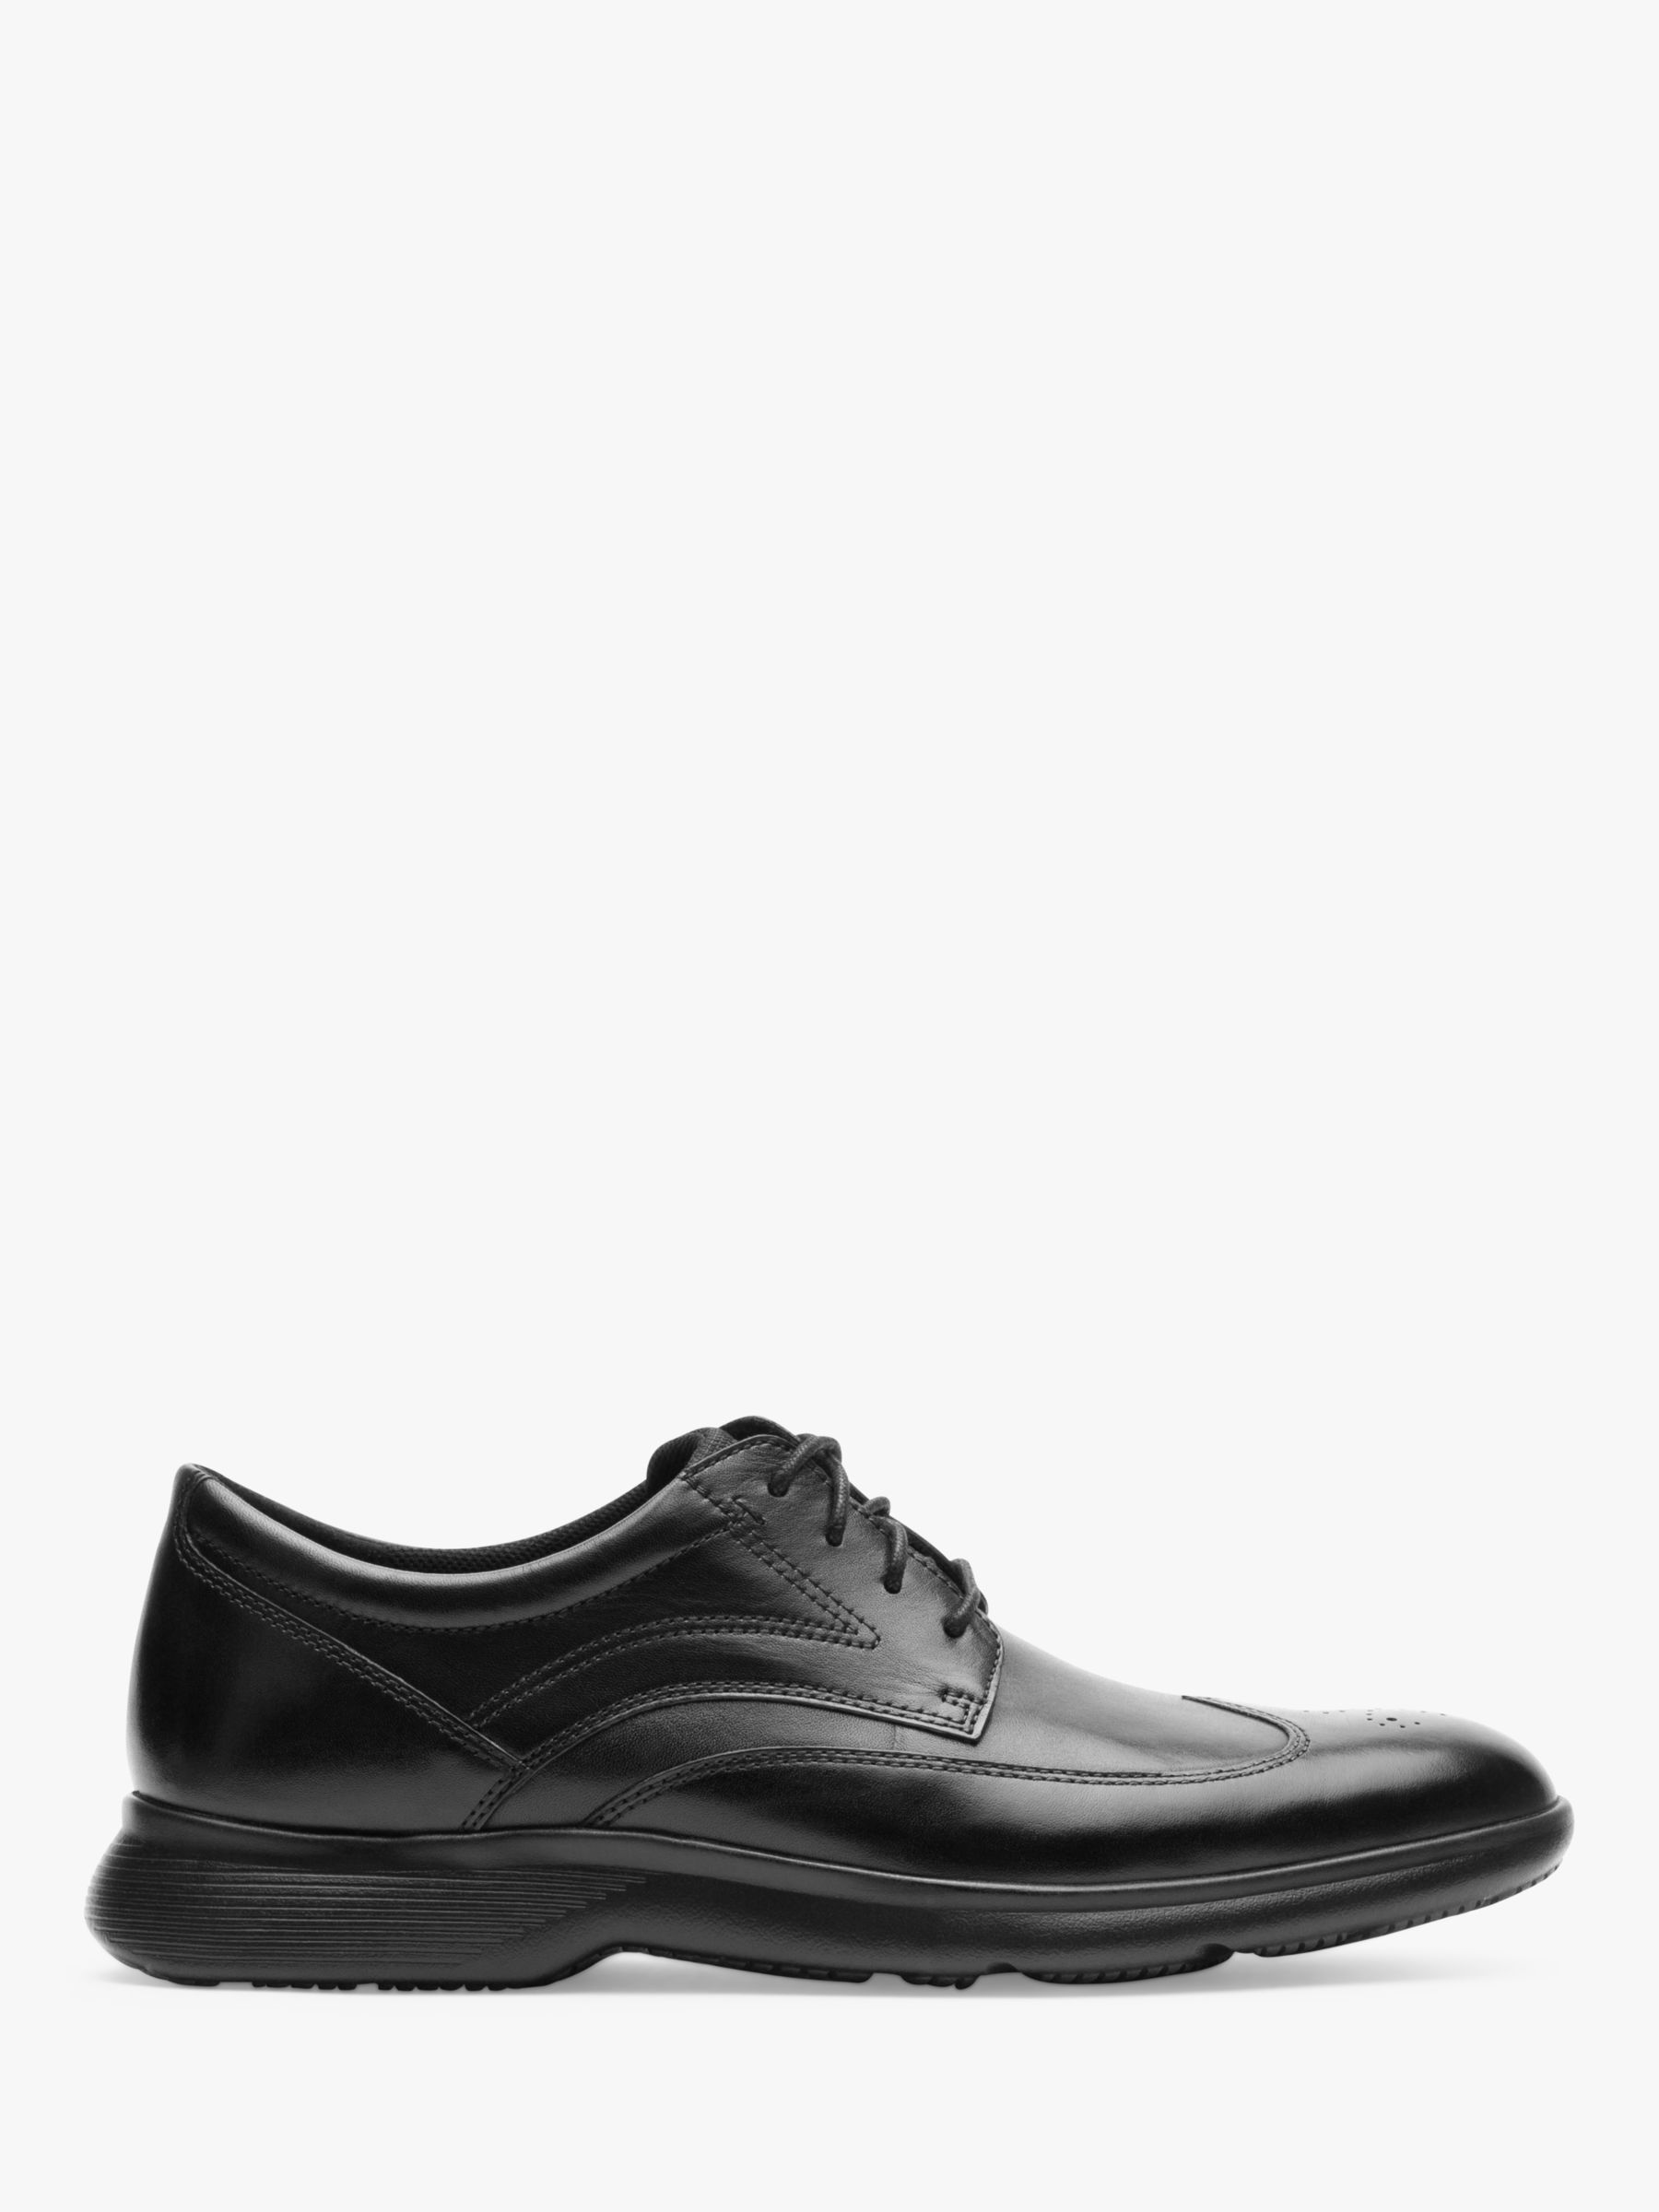 Rockport TrueFLEX DresSport Shoes, Black